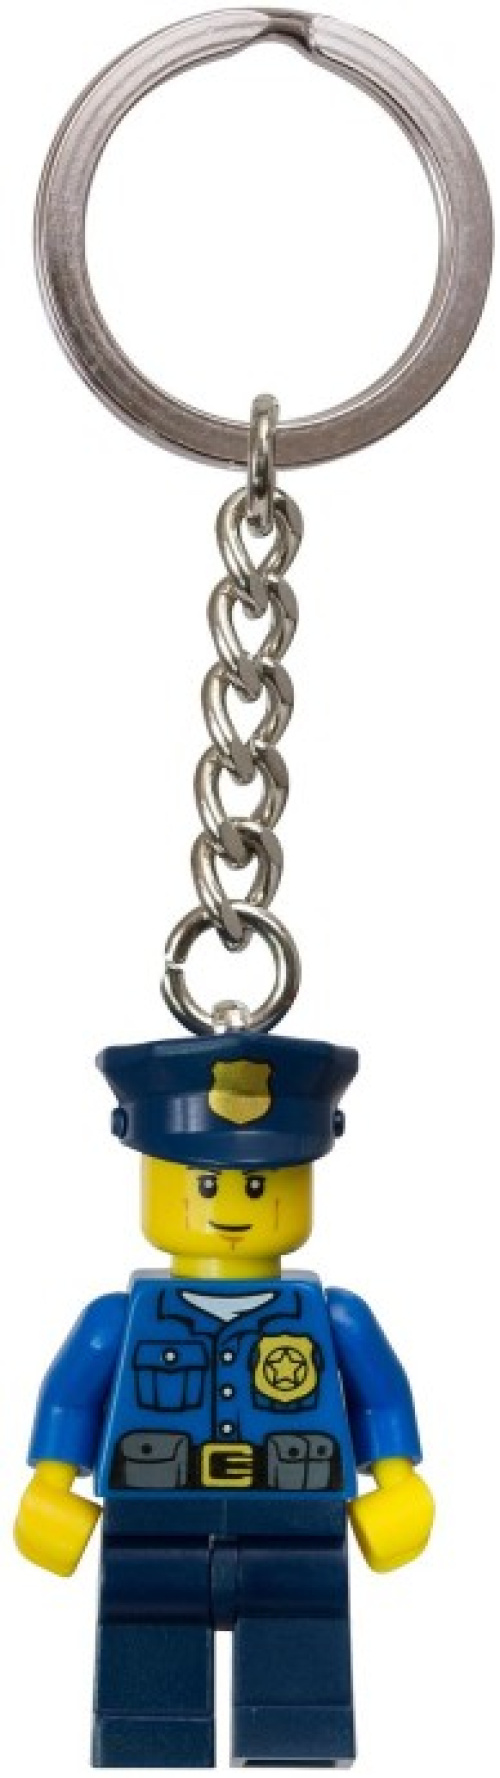 850933-1 City Policeman Key Chain